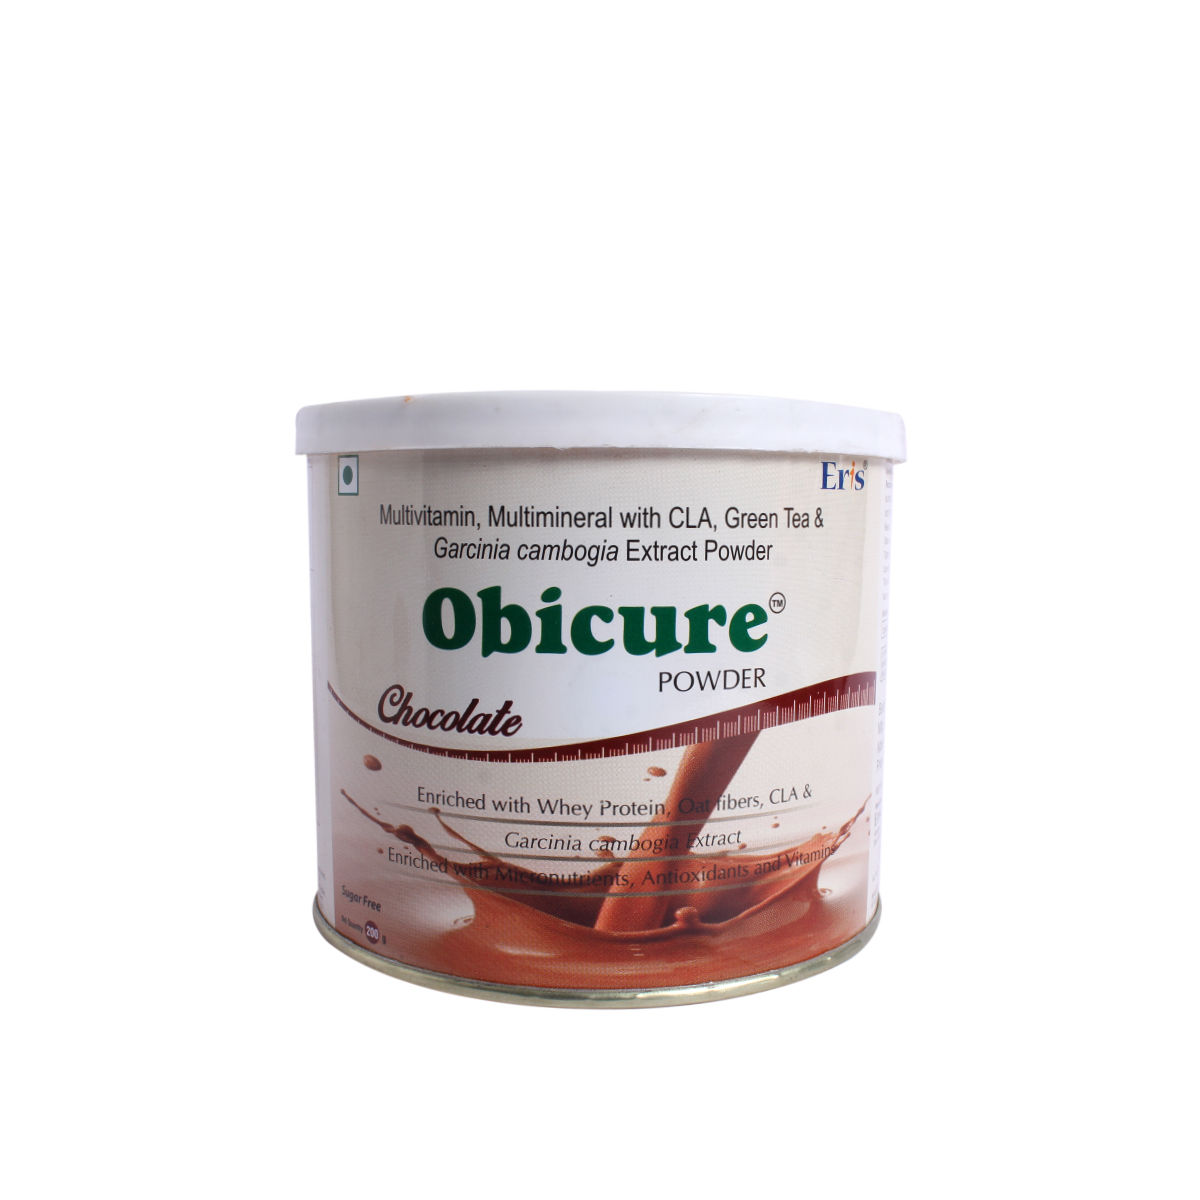 Obicure Sugar Free Chocolate Flavoured Powder, 200 gm Jar, Pack of 1 